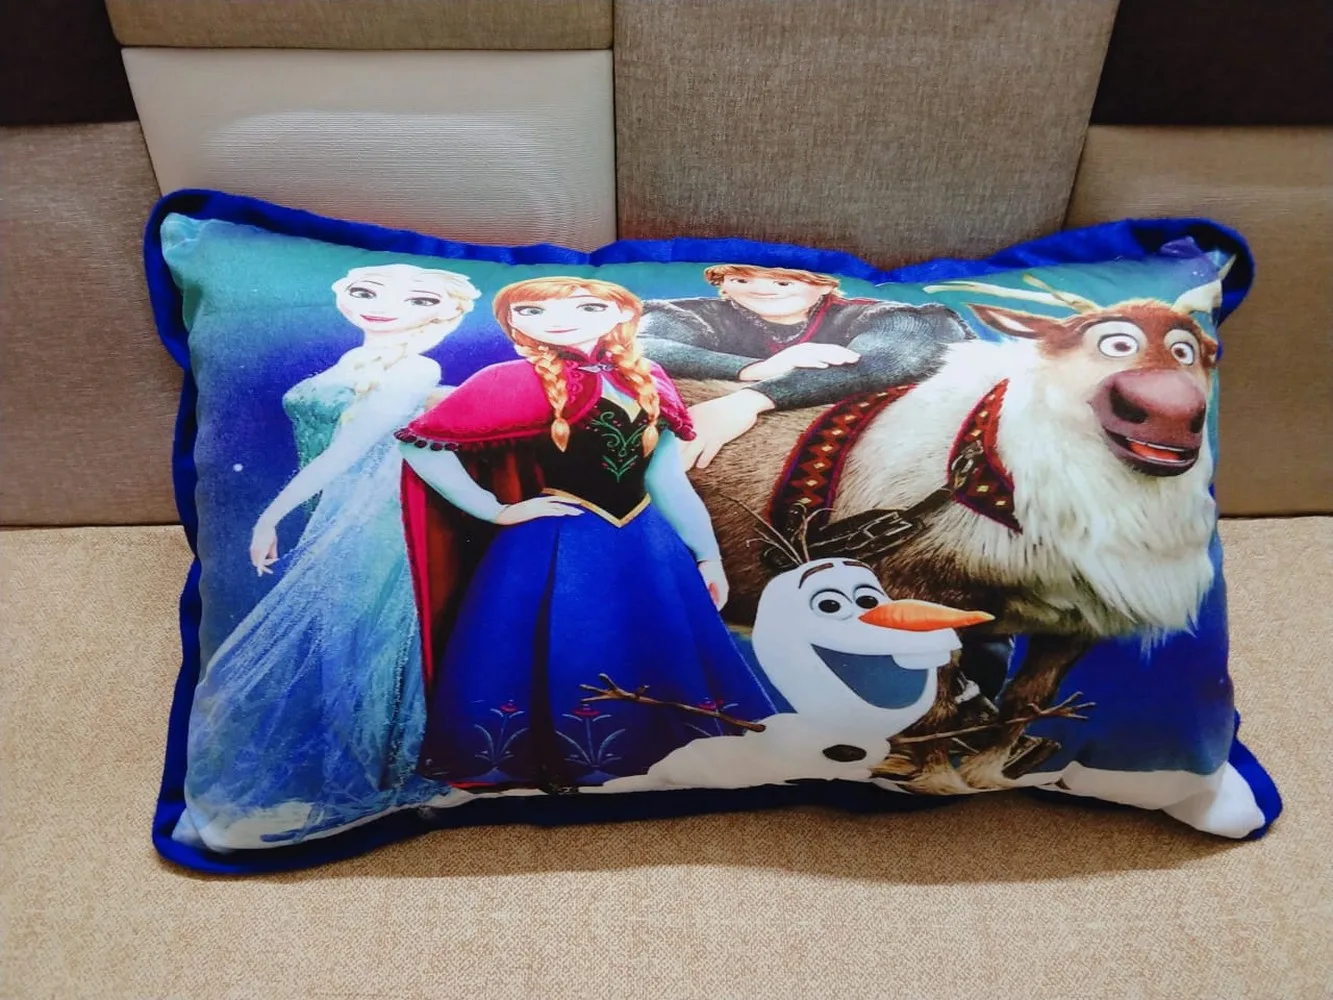 Kids Cartoon Pillow Frozen princess, 15x25, 1 Piece, Colorful